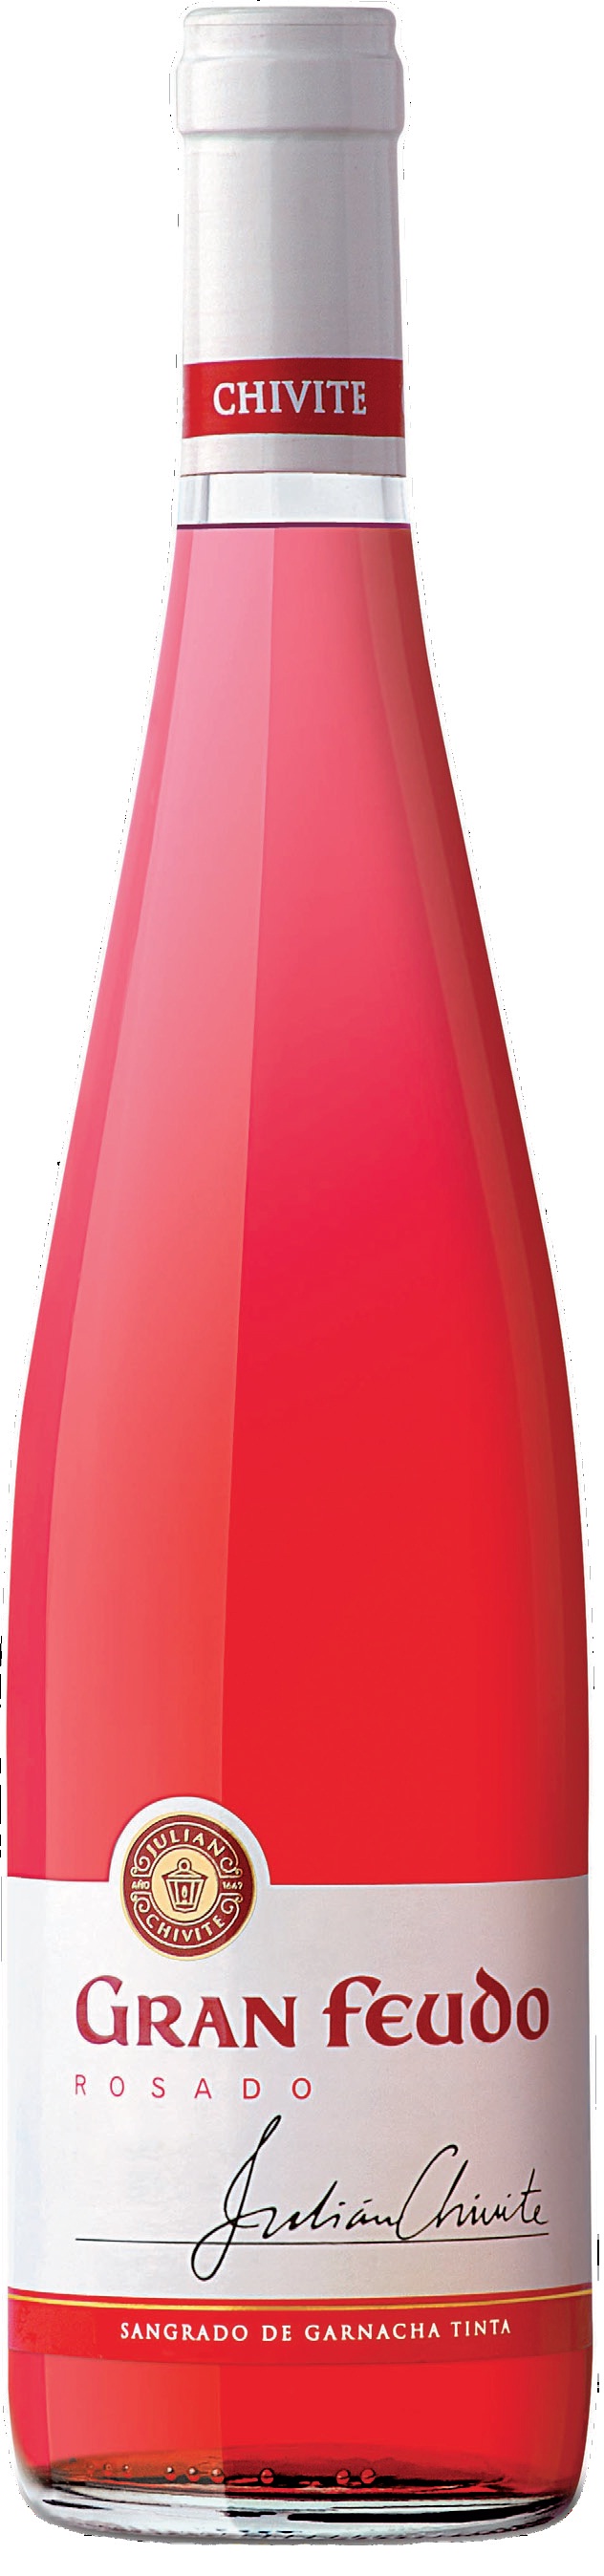 Image of Wine bottle Gran Feudo Rosado